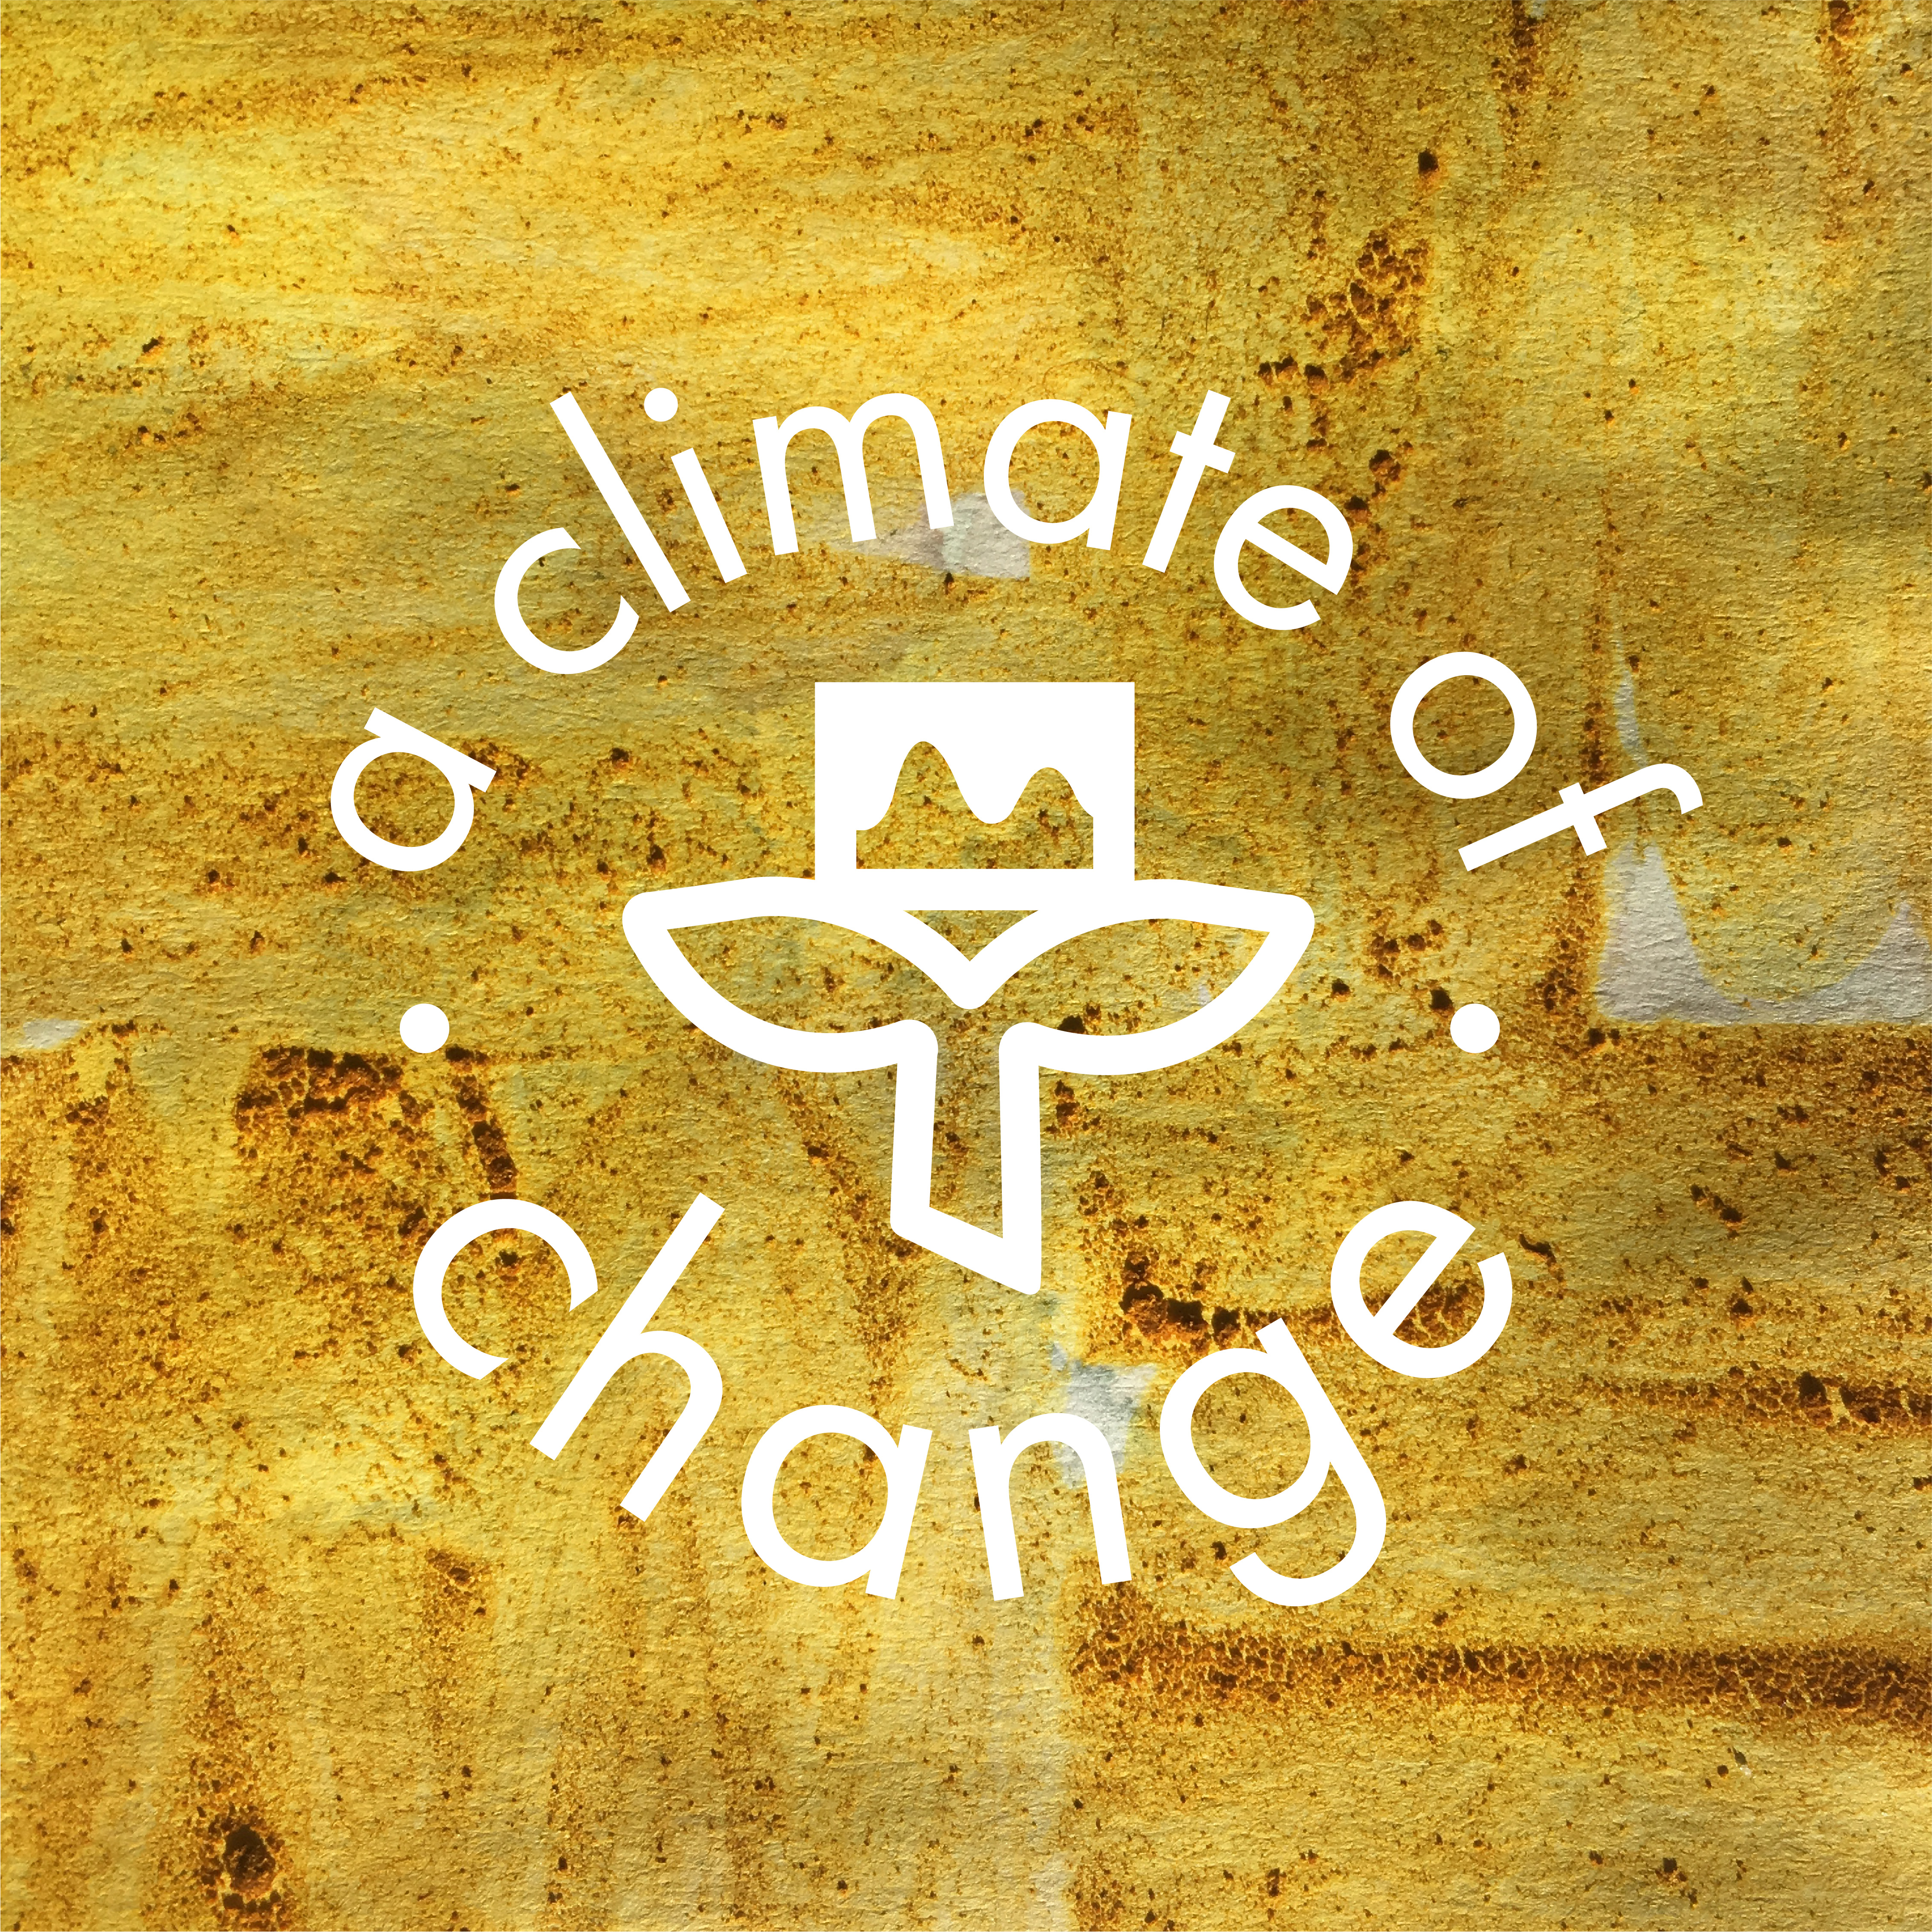 A Climate of Change workshop